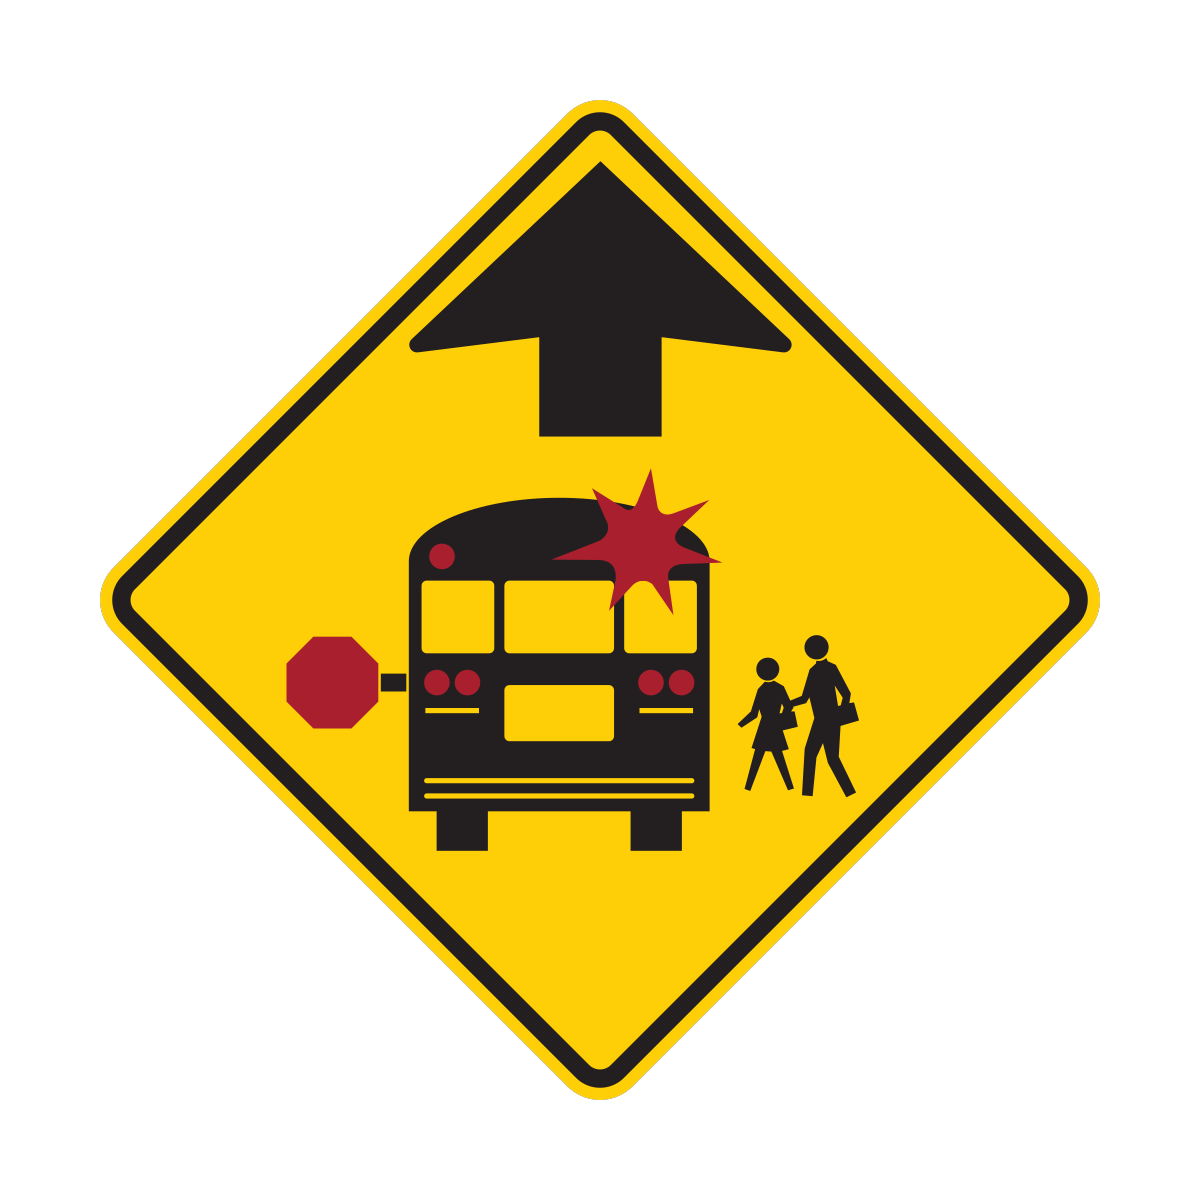 School Bus Stop Ahead Symbol Sign (S3-1)